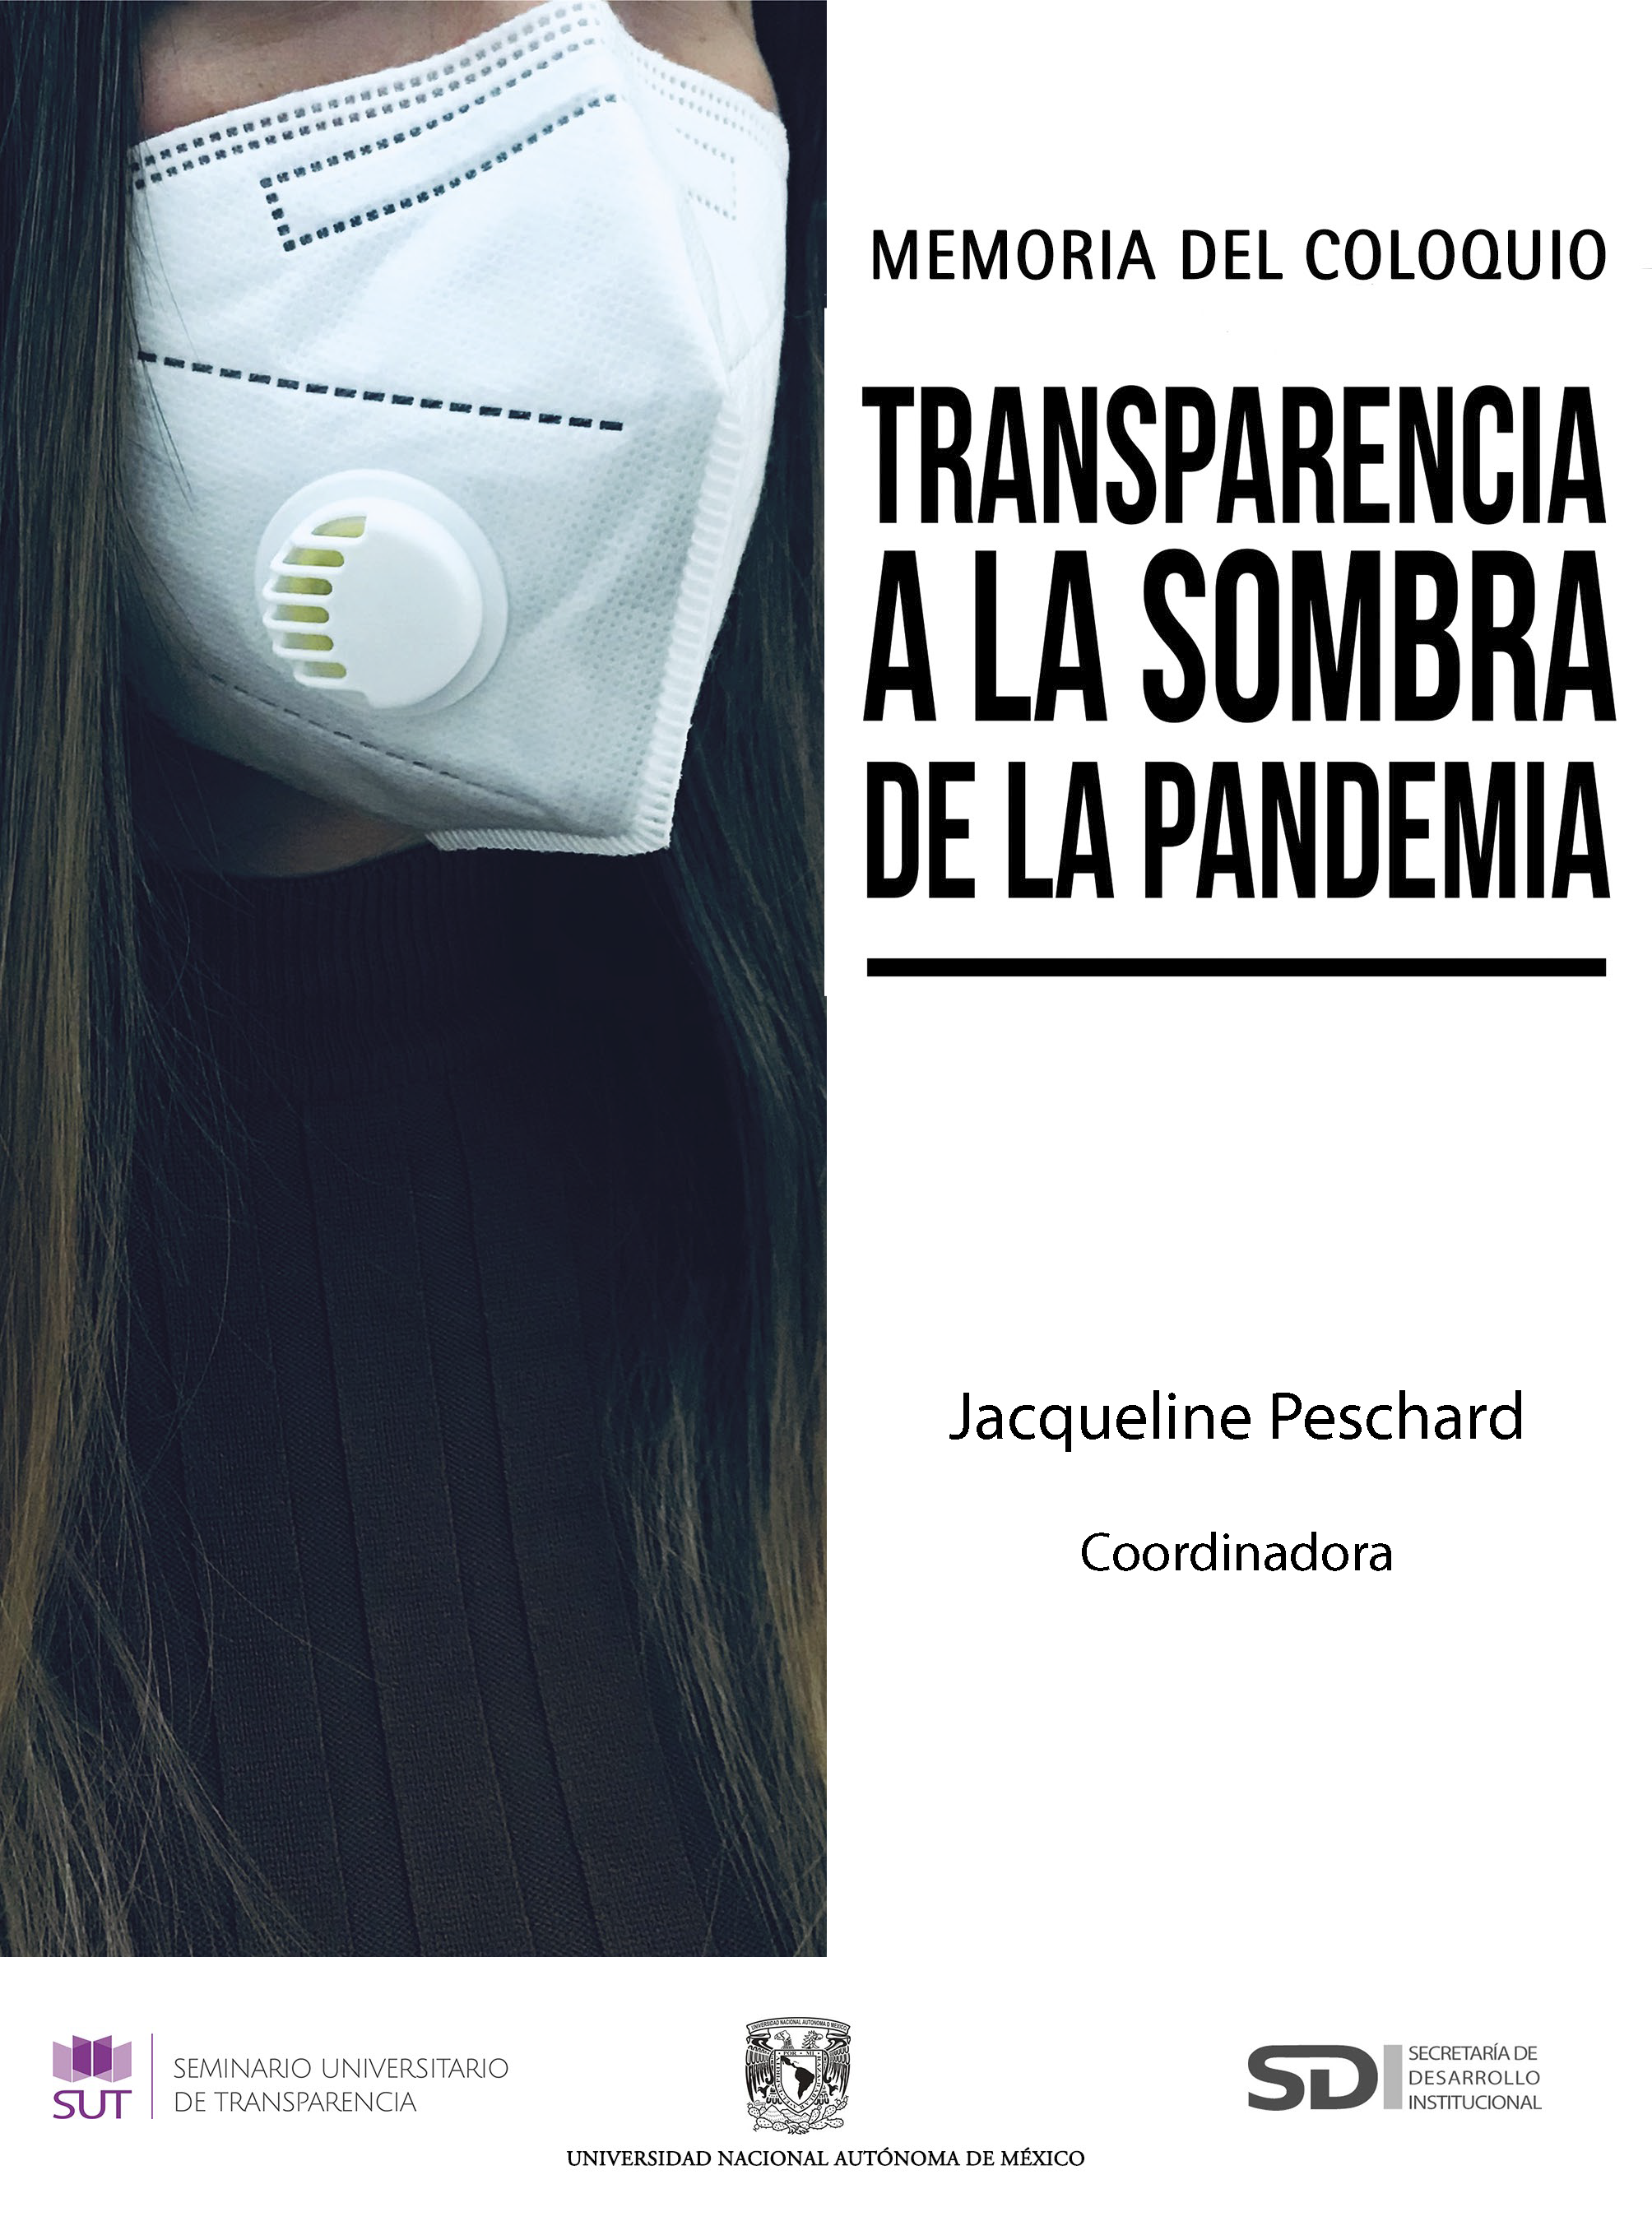 Memoria del Coloquio: Transparencia a la sombra de la pandemia